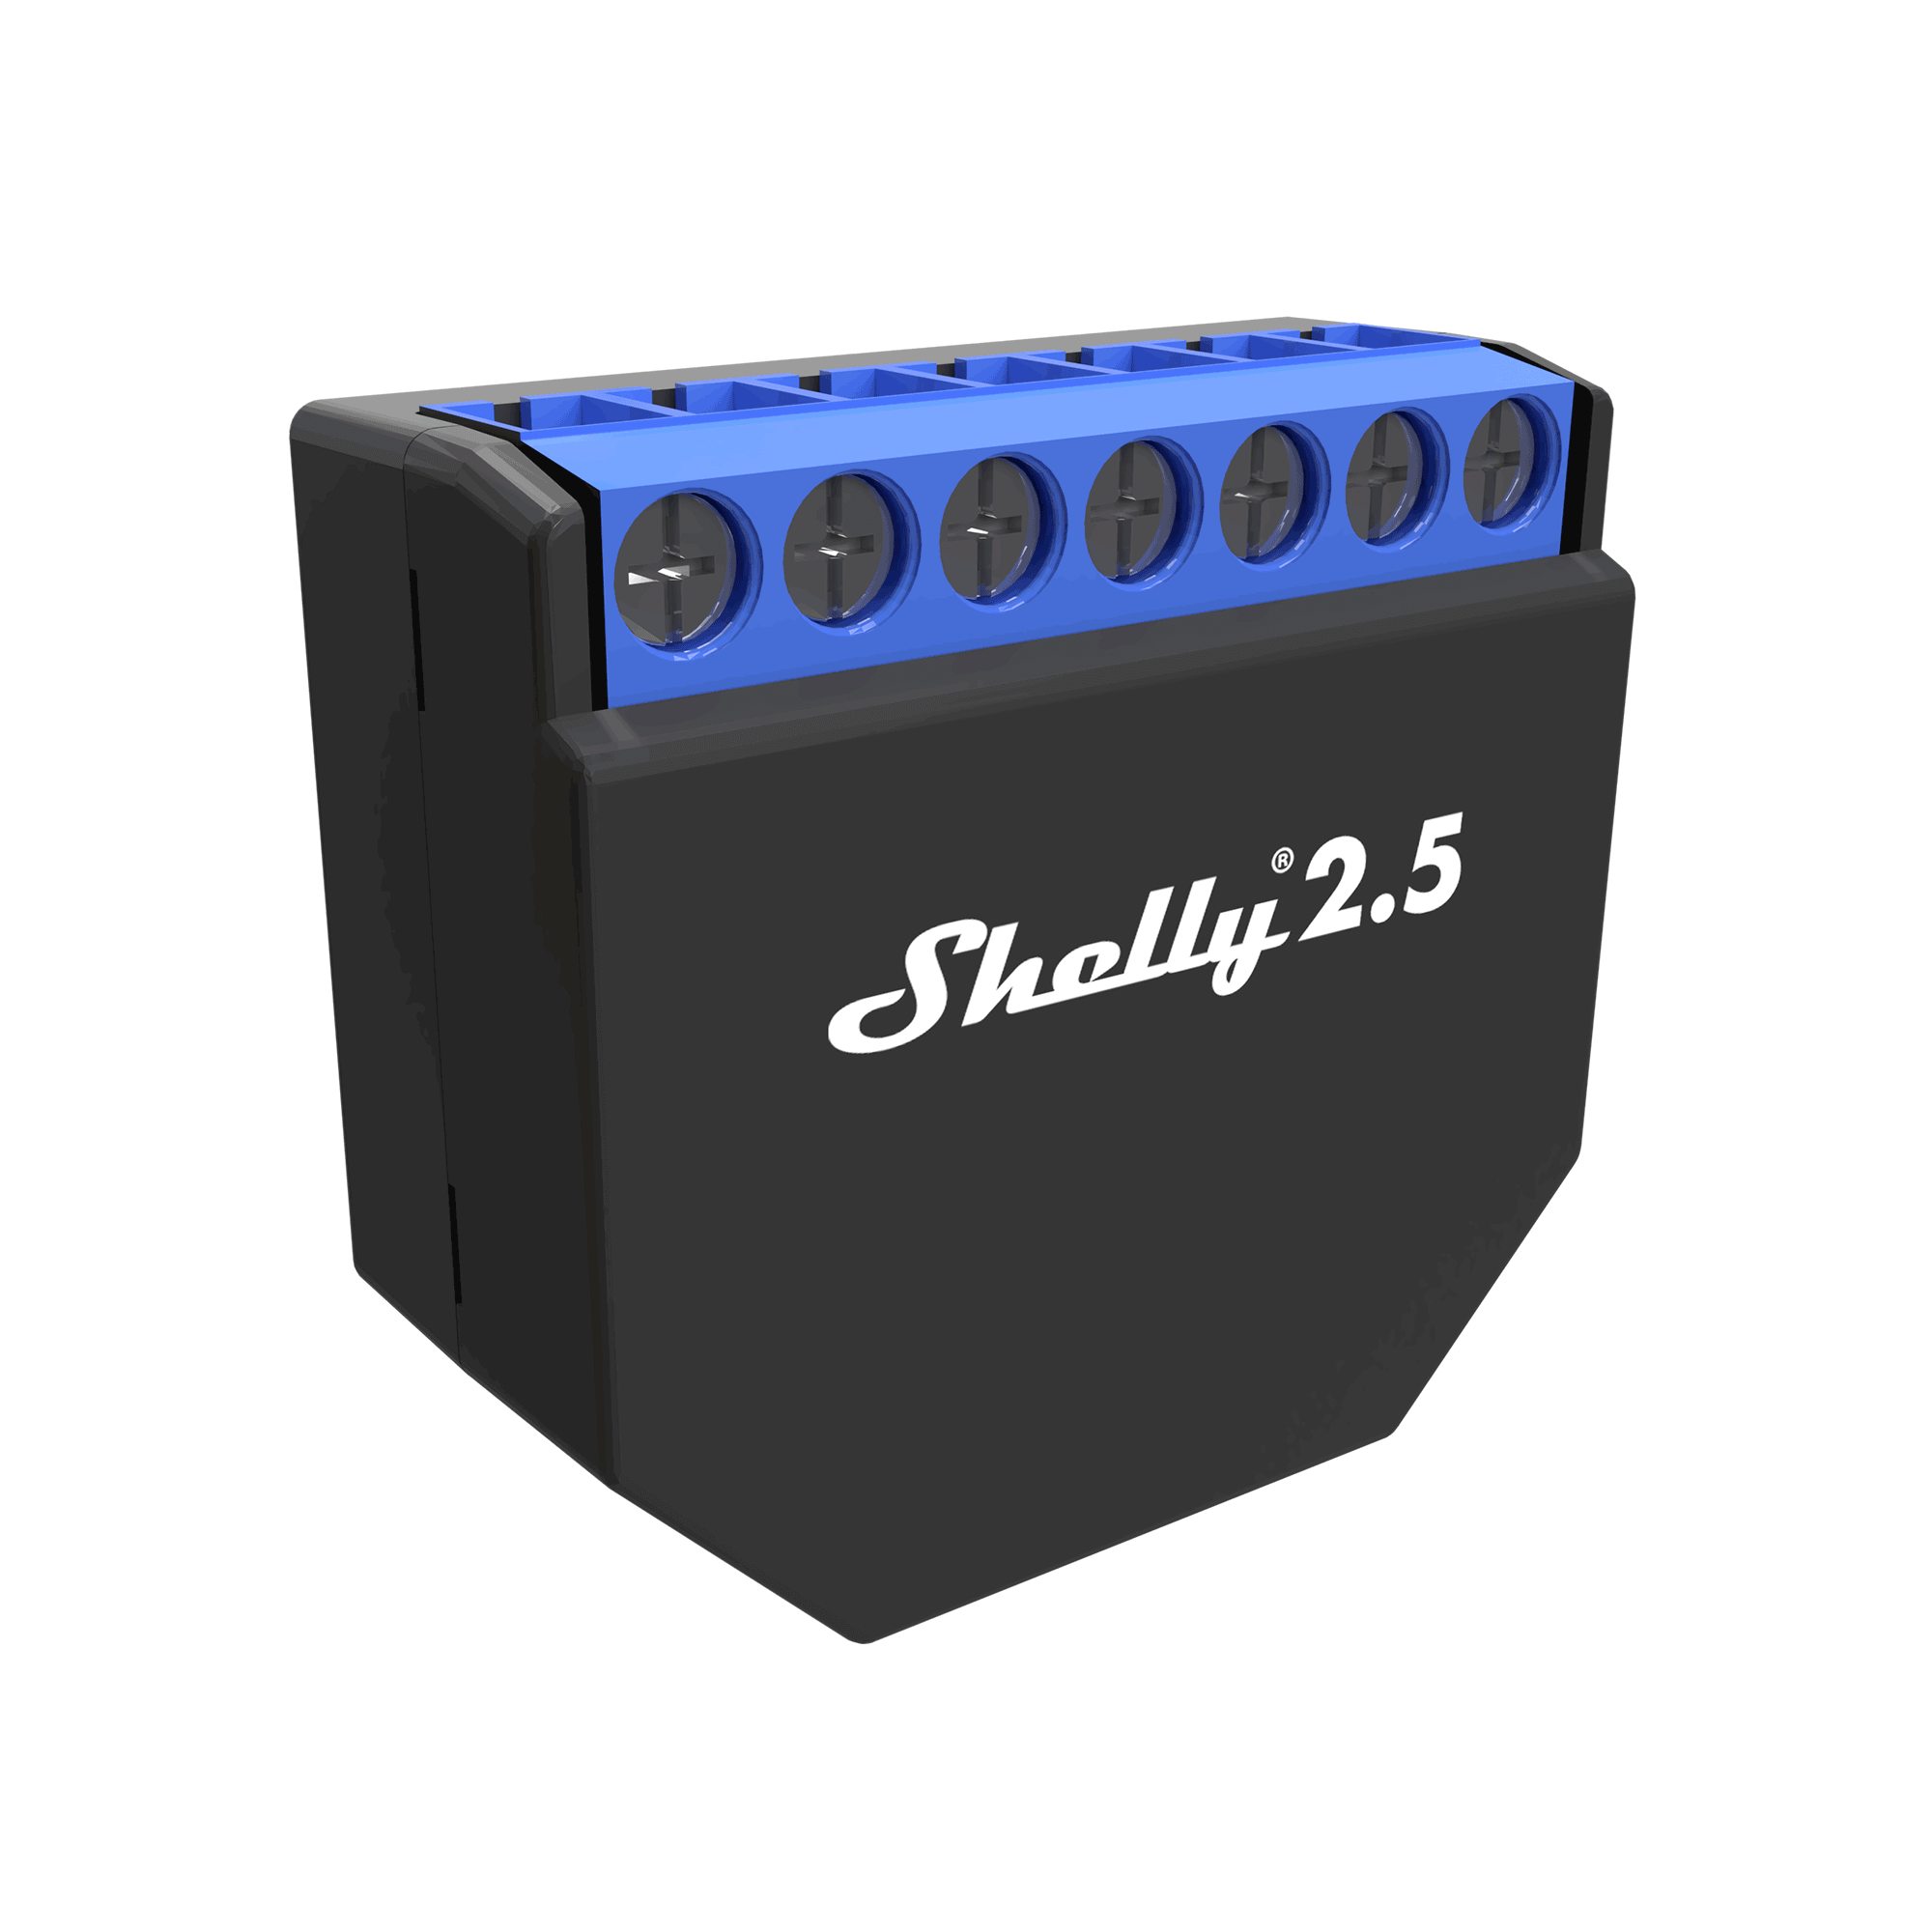 shelly 2.5 UL Listed 2pcs Alexa and Google Home 